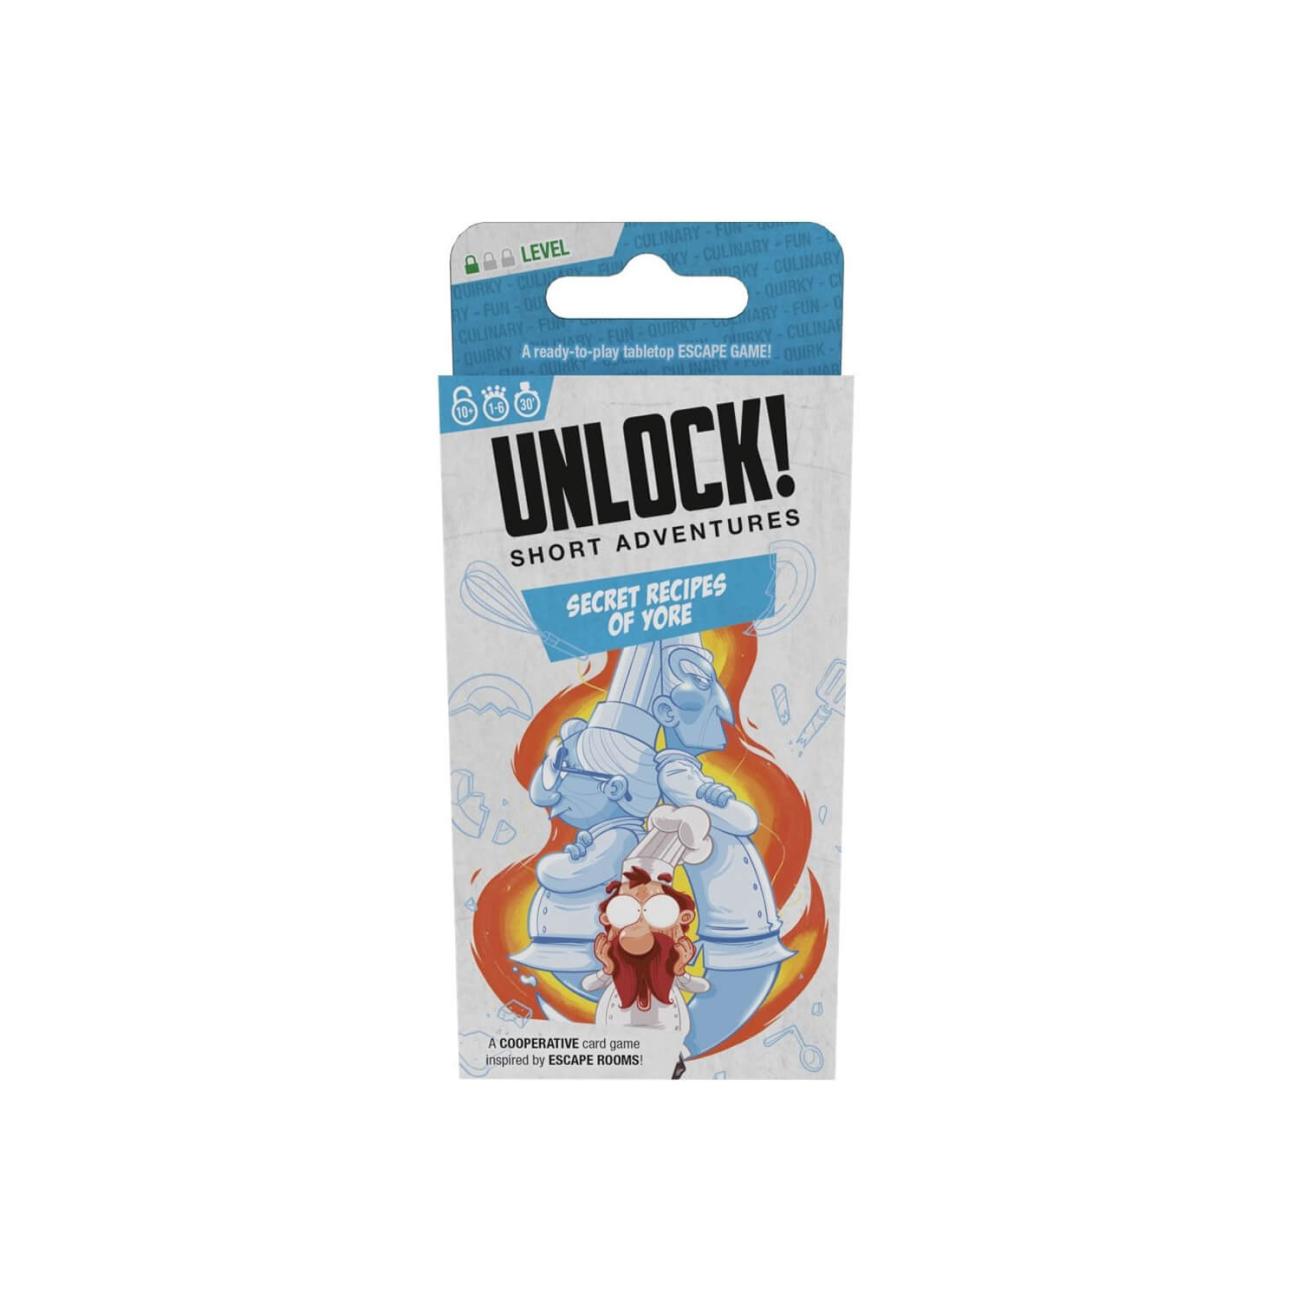 Unlock! Short Adventures Secret Recipes of Yore